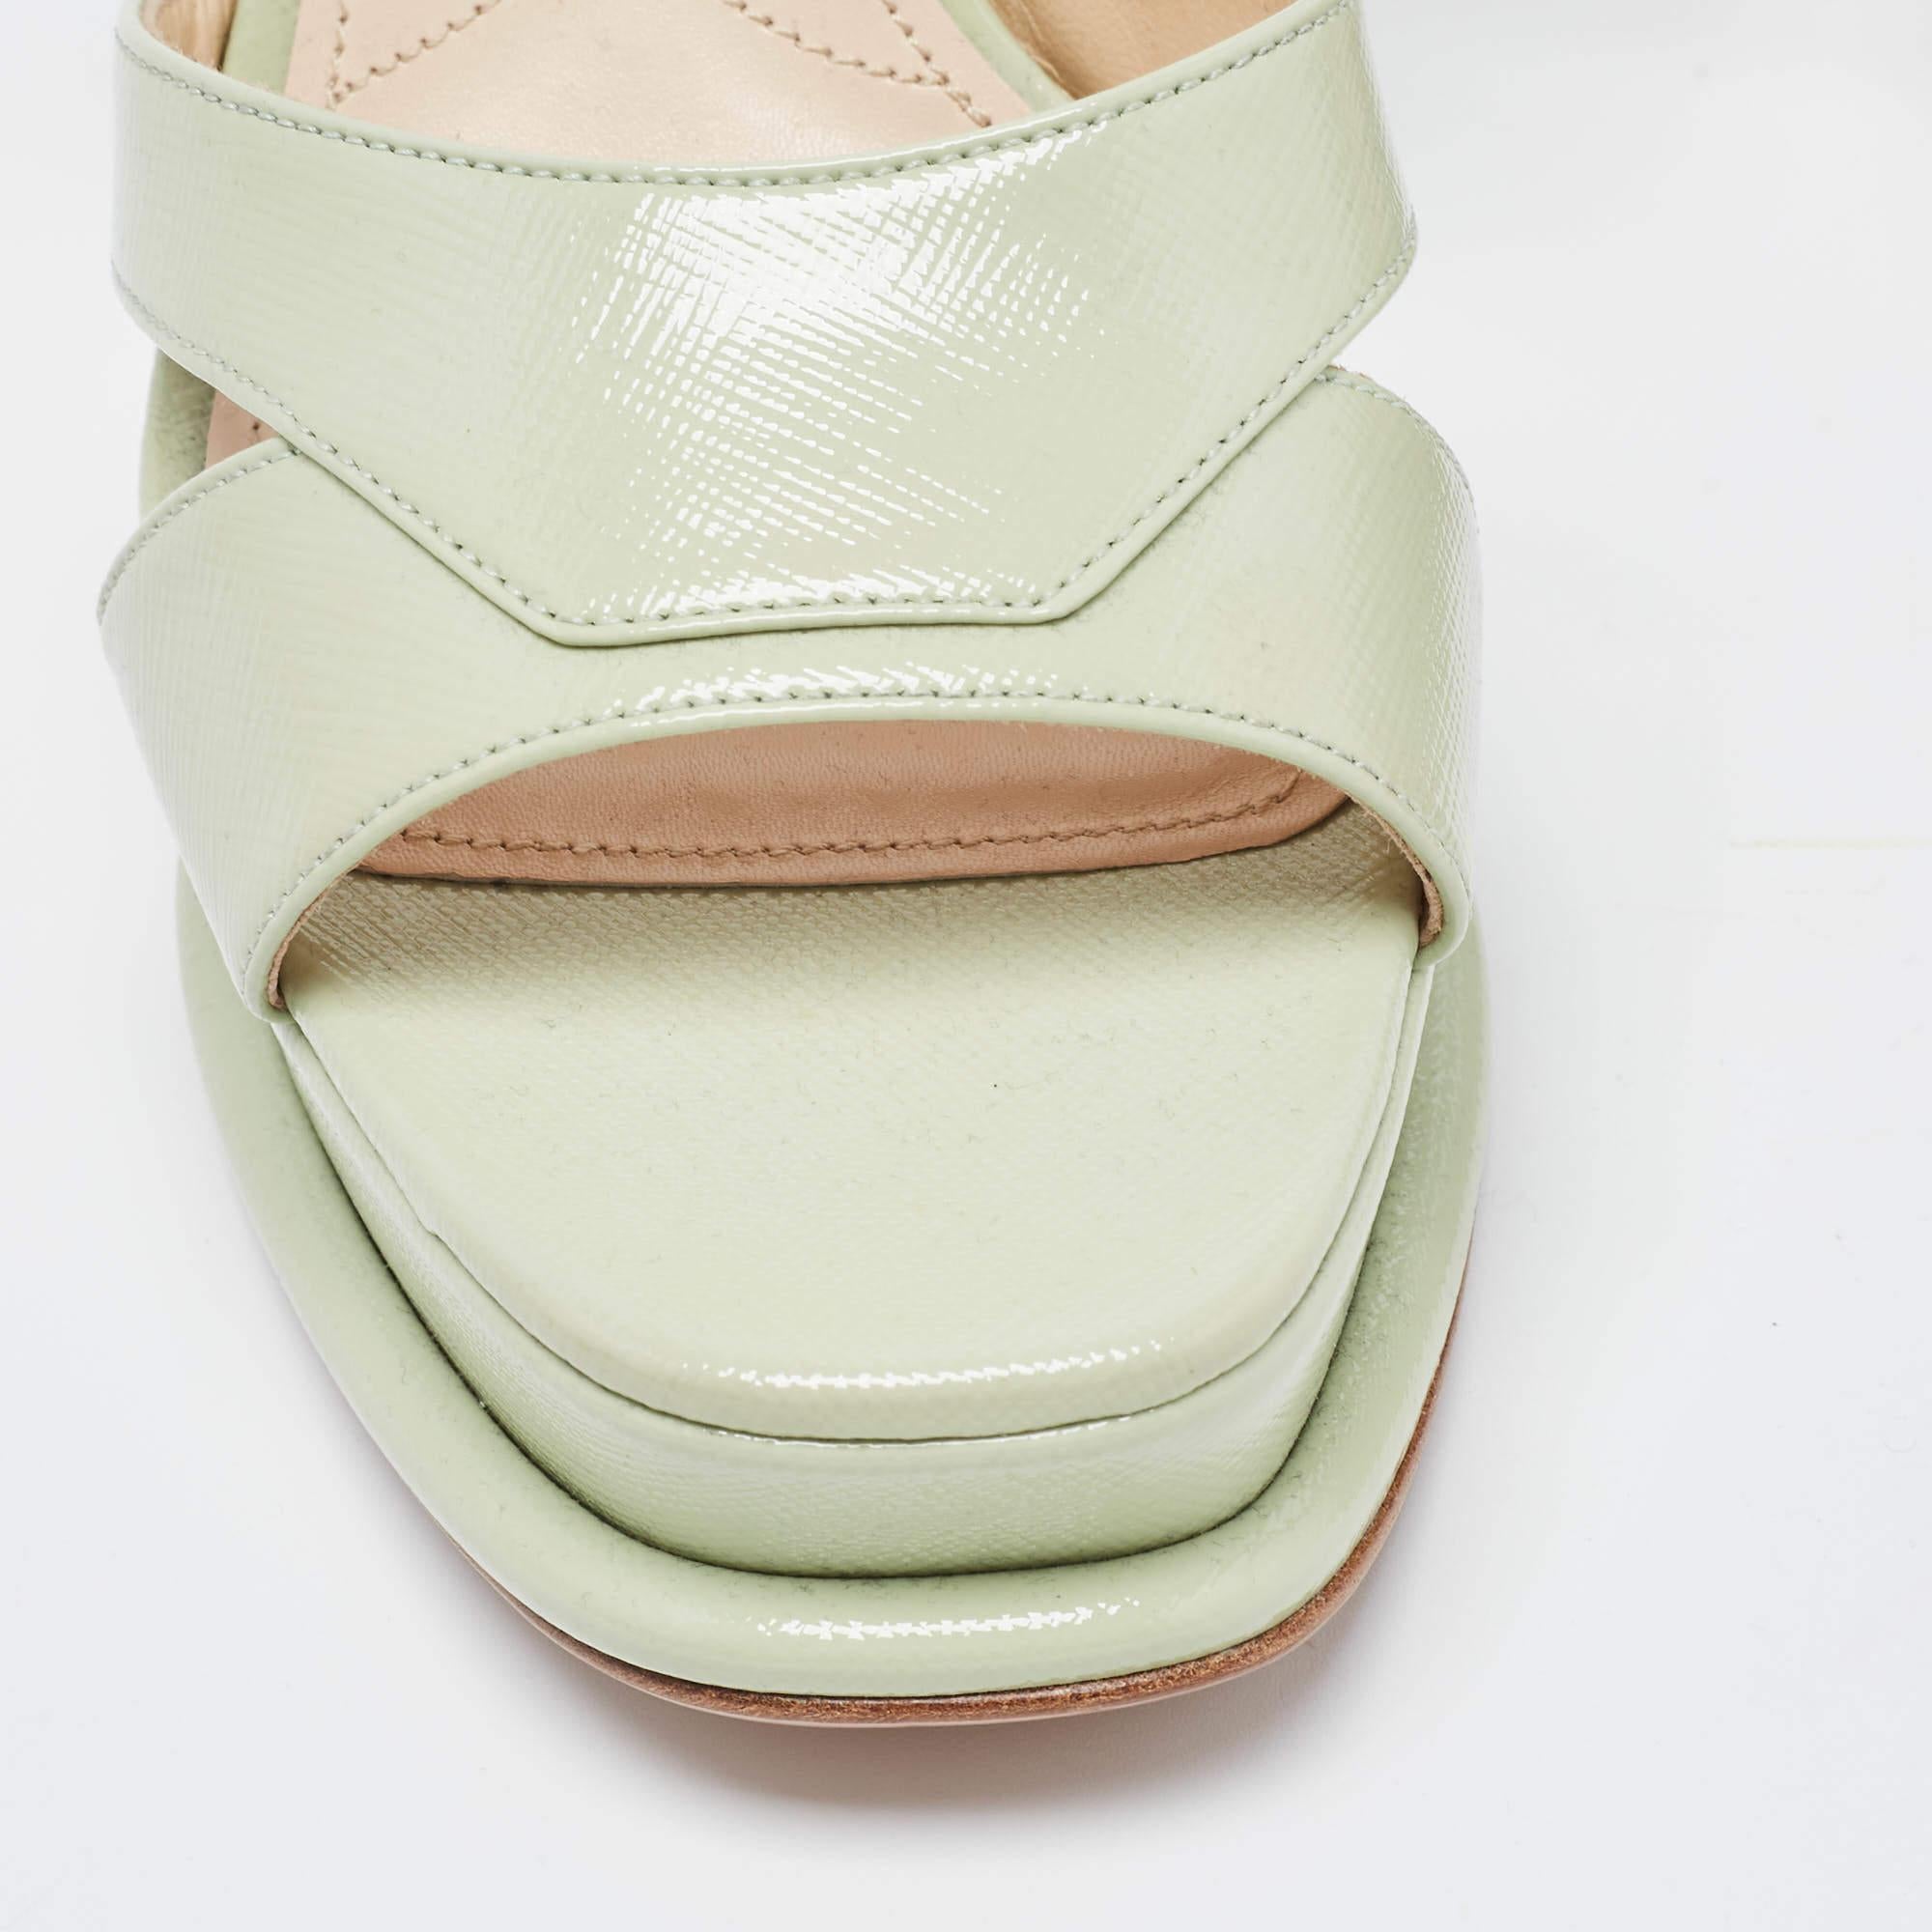 Prada Mint Green Saffiano Leather Platform Ankle Strap Sandals Size 39 4